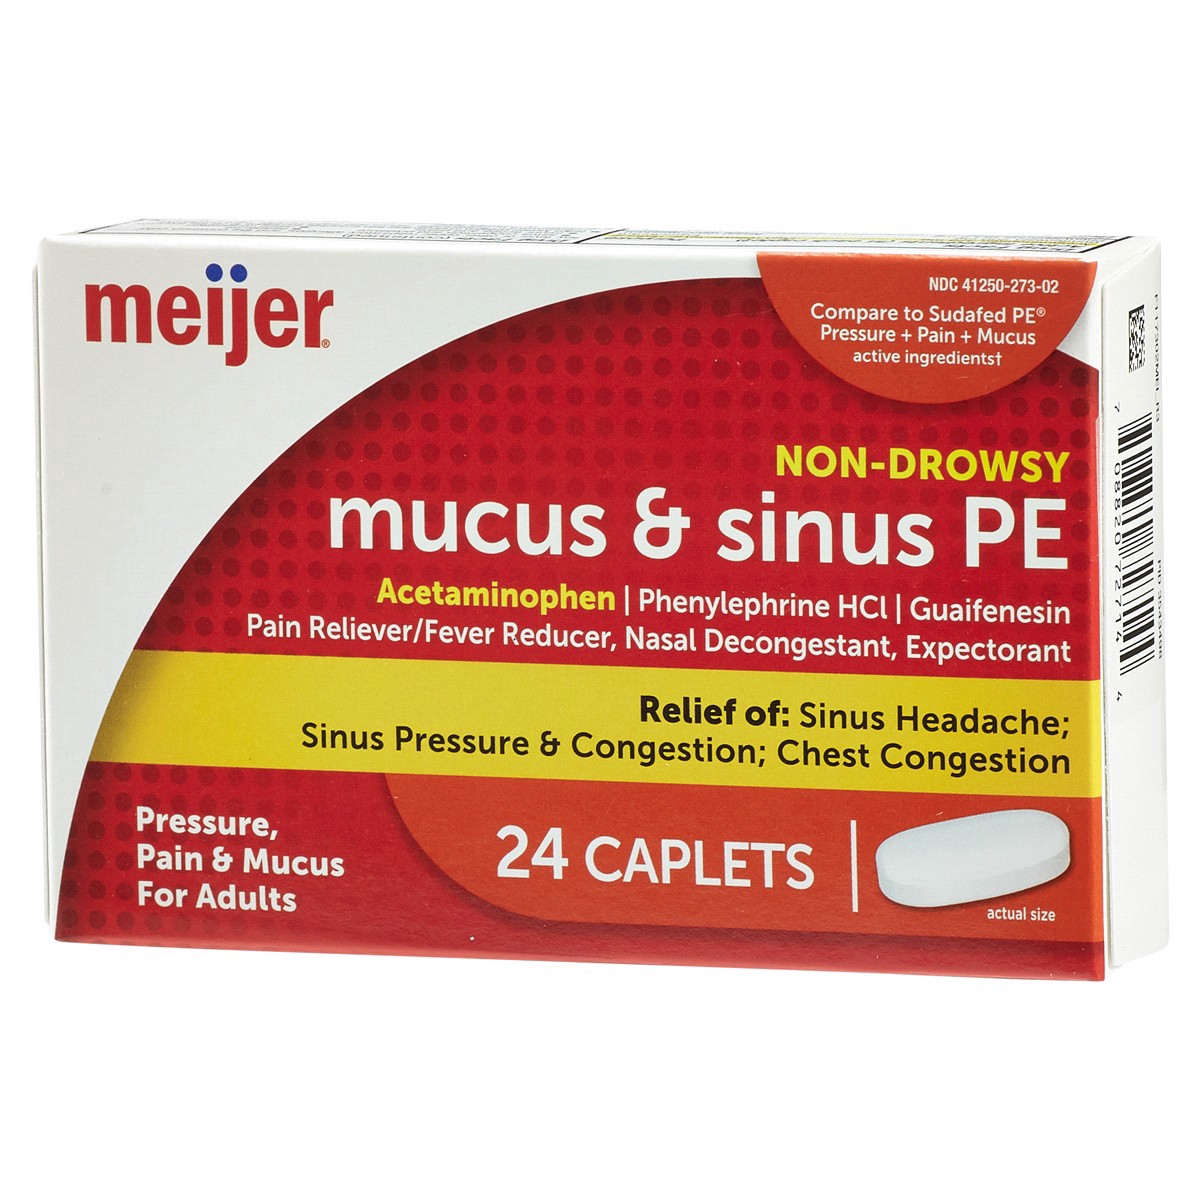 slide 9 of 29, Meijer Mucus & Sinus PE Caplets, 24 ct